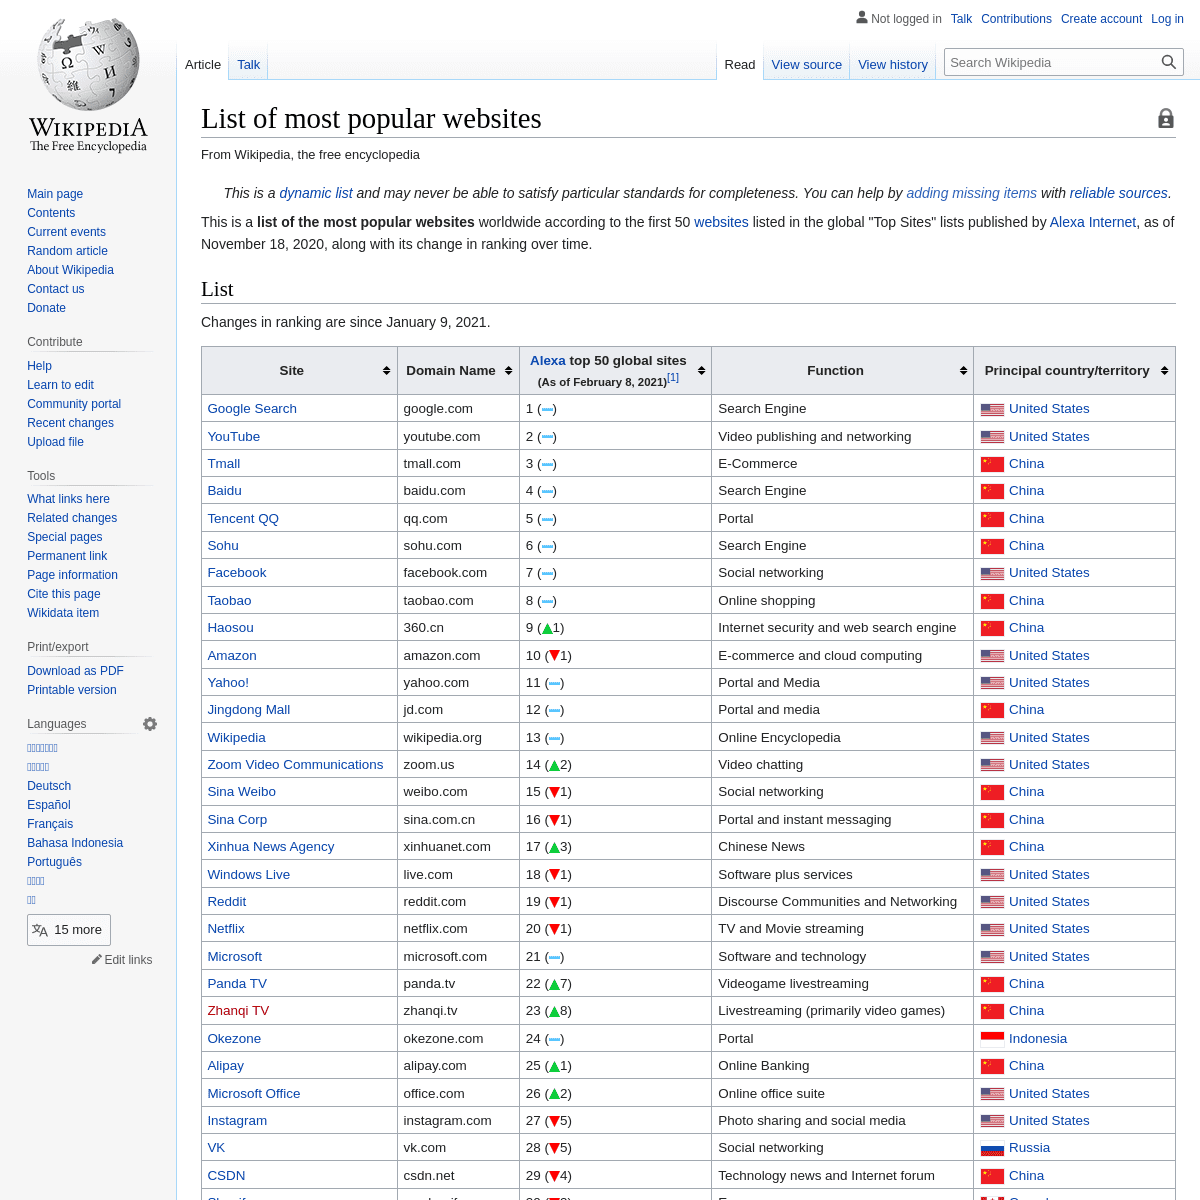 A complete backup of https://en.wikipedia.org/wiki/List_of_most_popular_websites